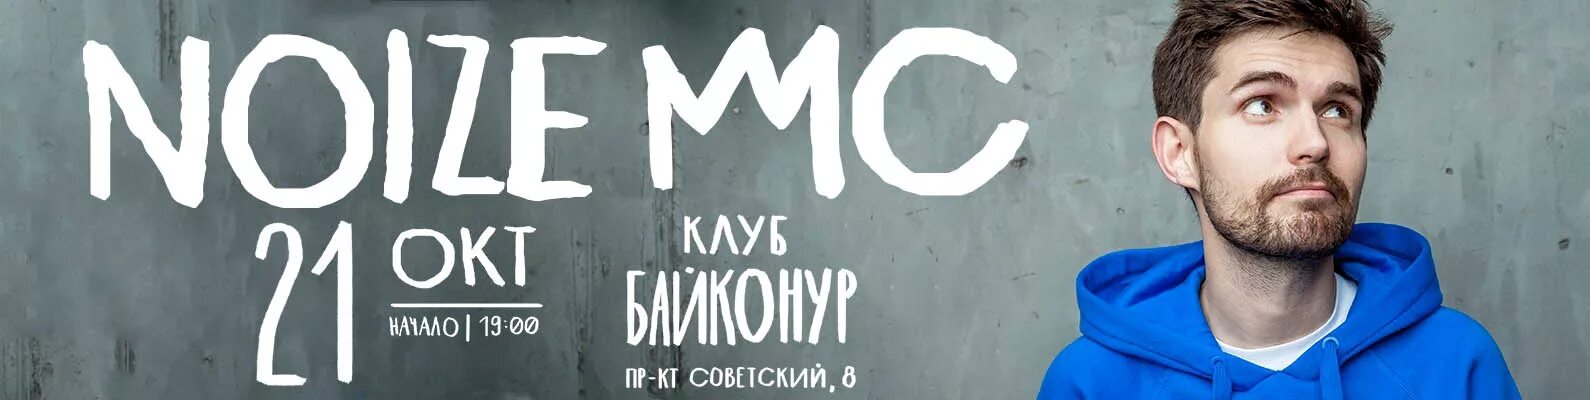 Мс контакт. Нойз МС фото. Лейблы нойз МС. Noize MC logo. Noize MC Новосибирск.